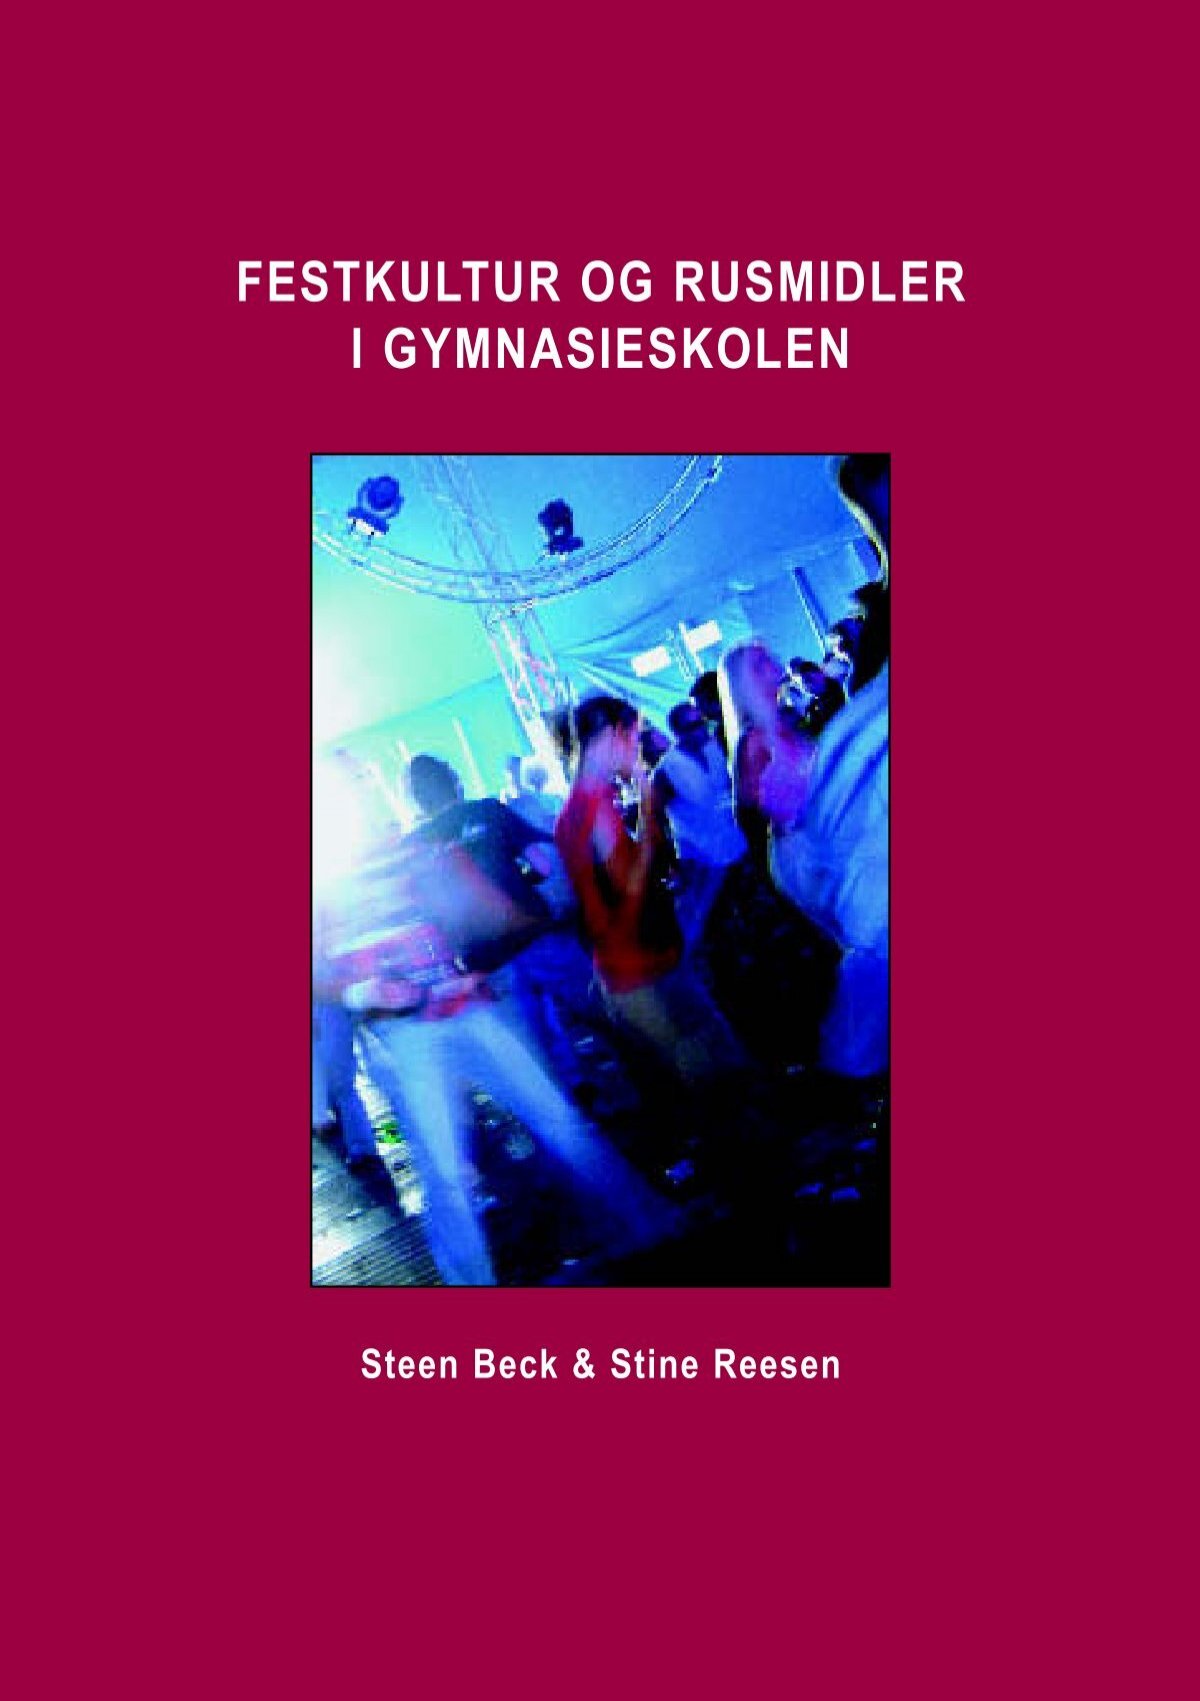 Festkultur og rusmidler gymnasieskolen - Silkeborg-SSP